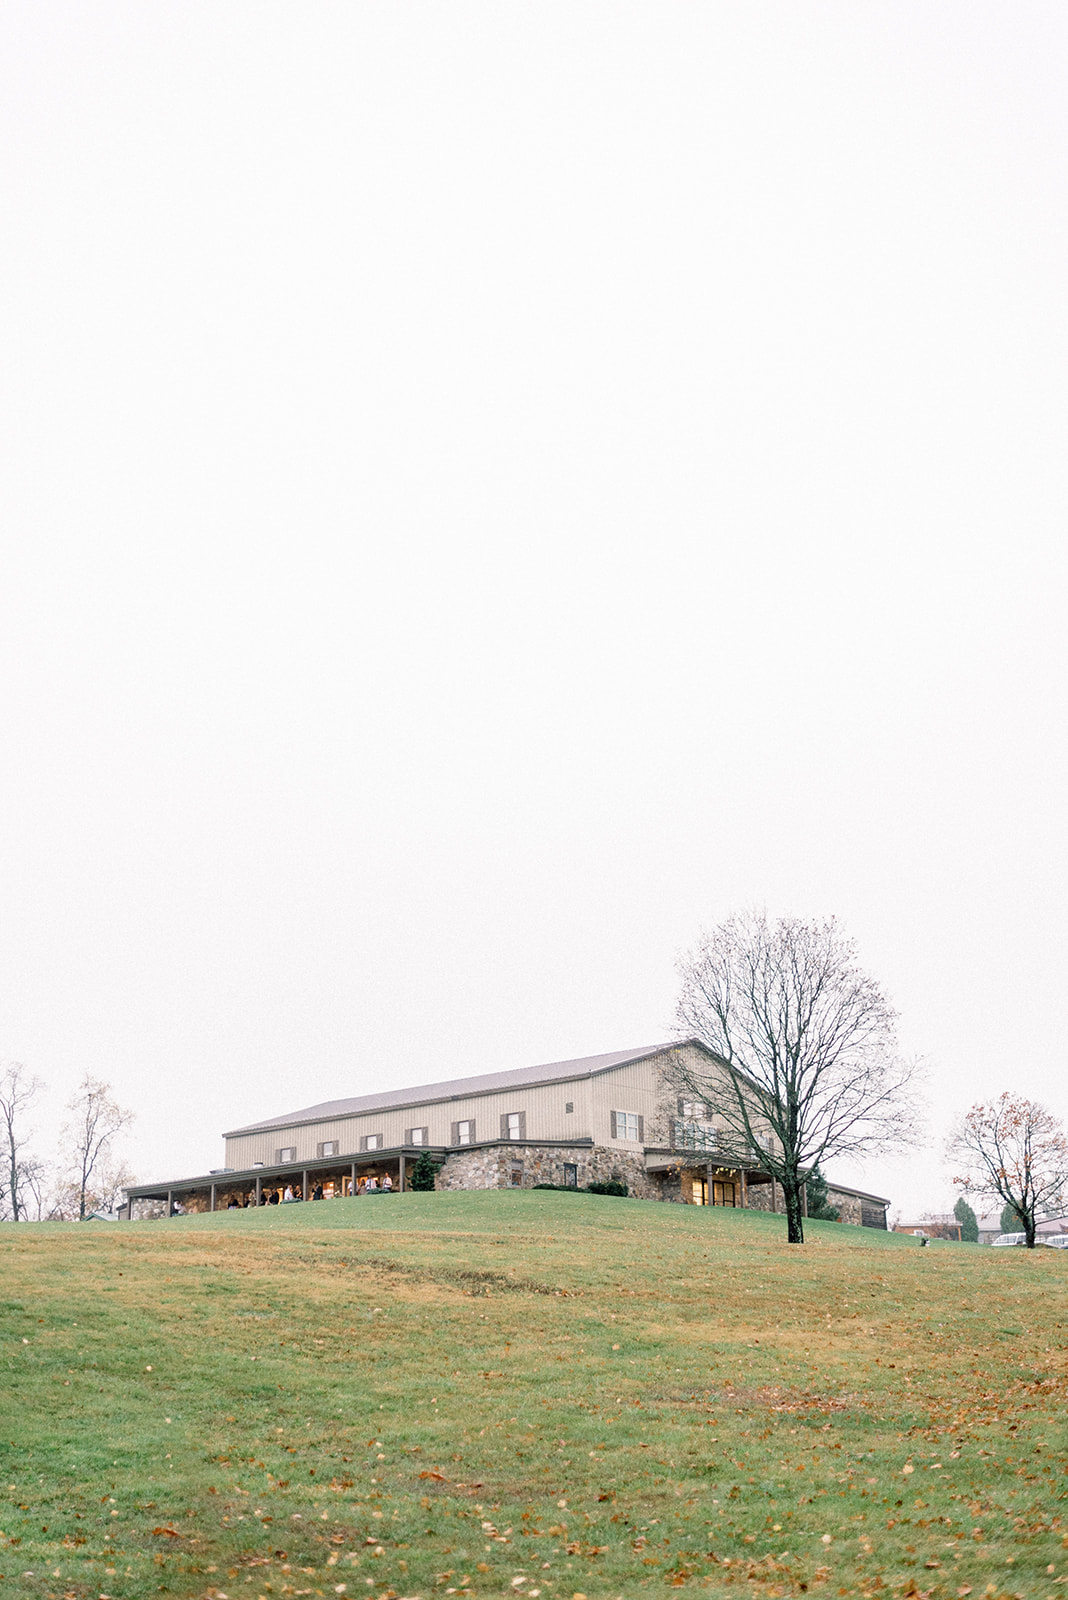 Pennsylvania wedding photographer captures wedding venue